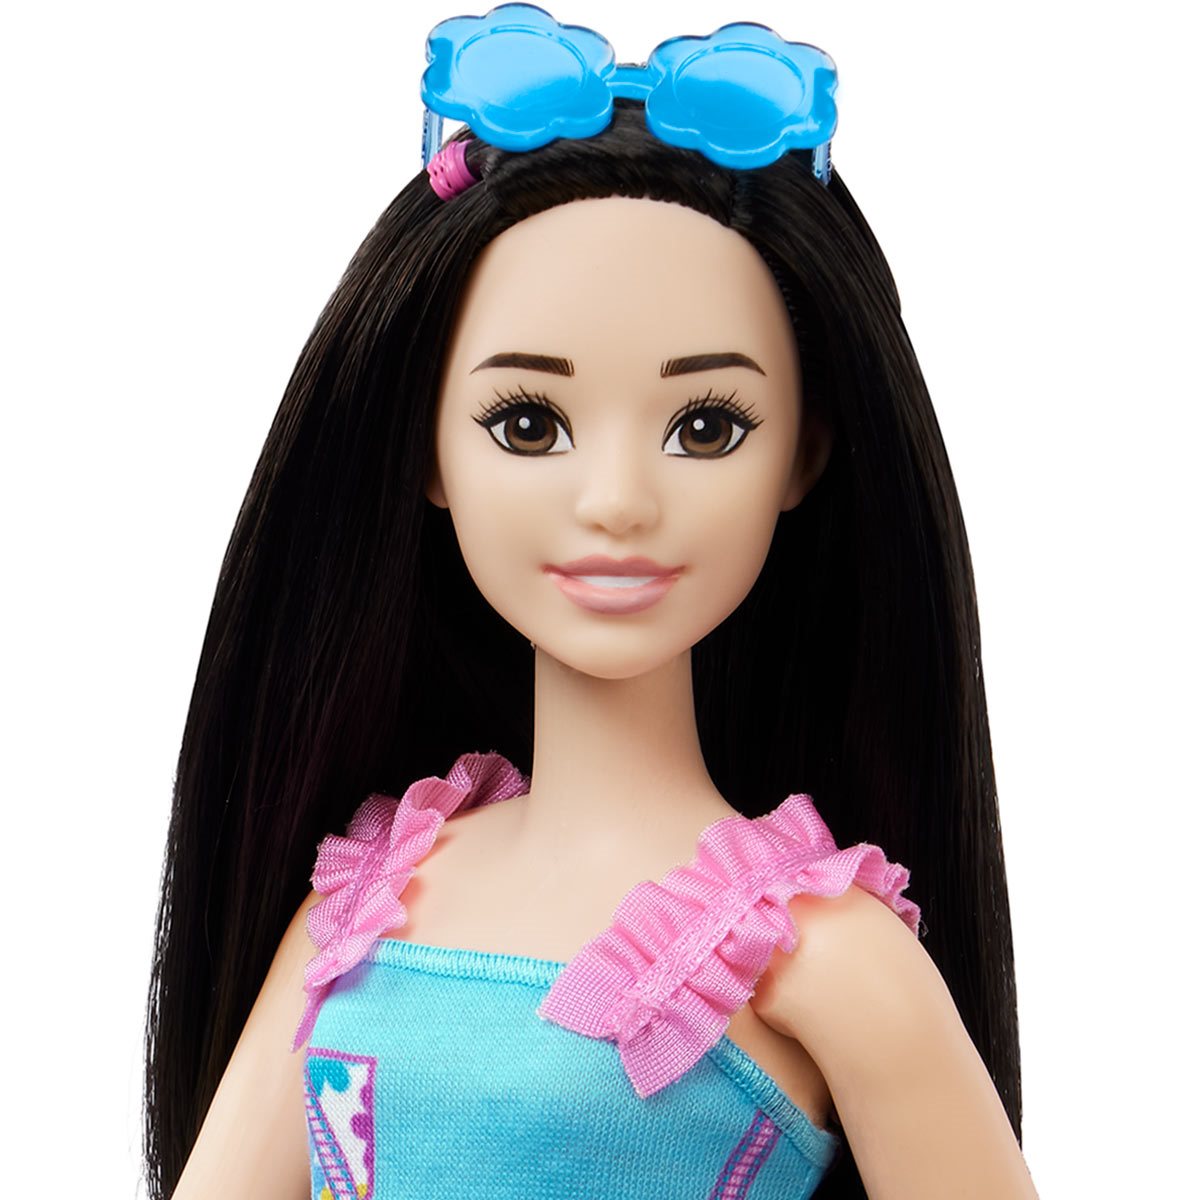 Barbie  28inch Best Fashion Friend Doll  Black Hair  JP61022  Toys  4You Store